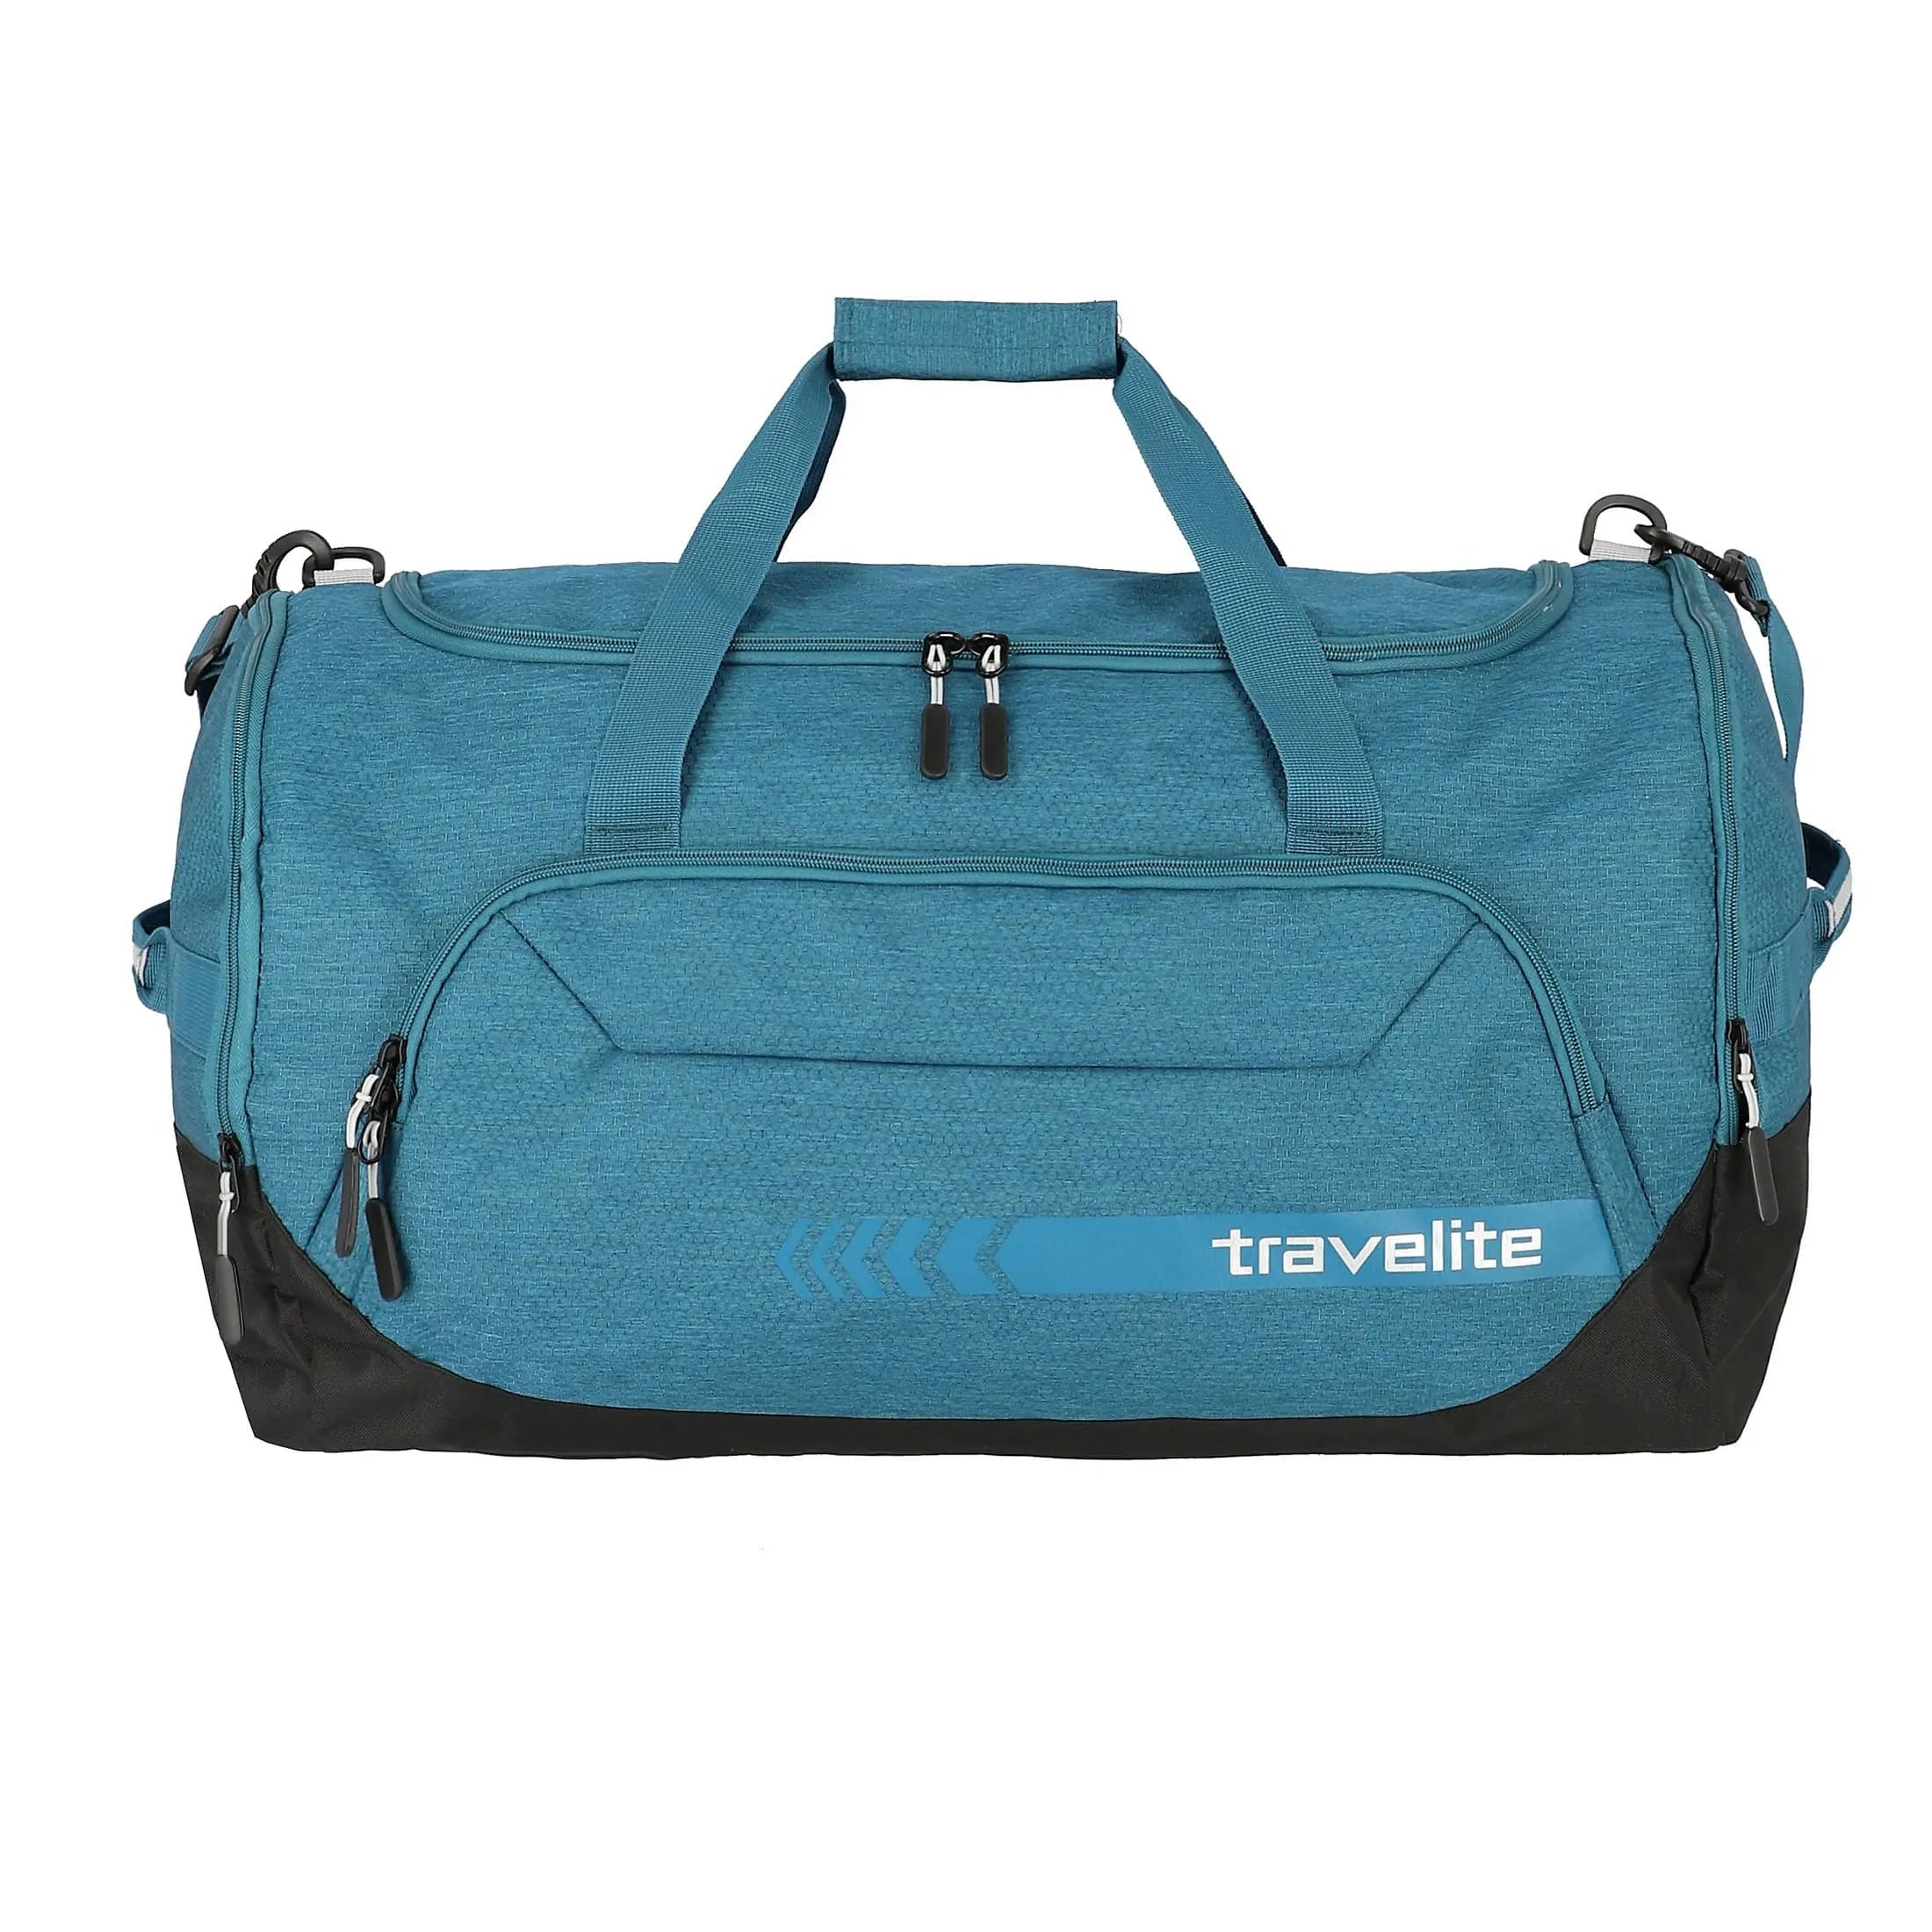 Travelite Kick Off travel bag 60 cm - rosé